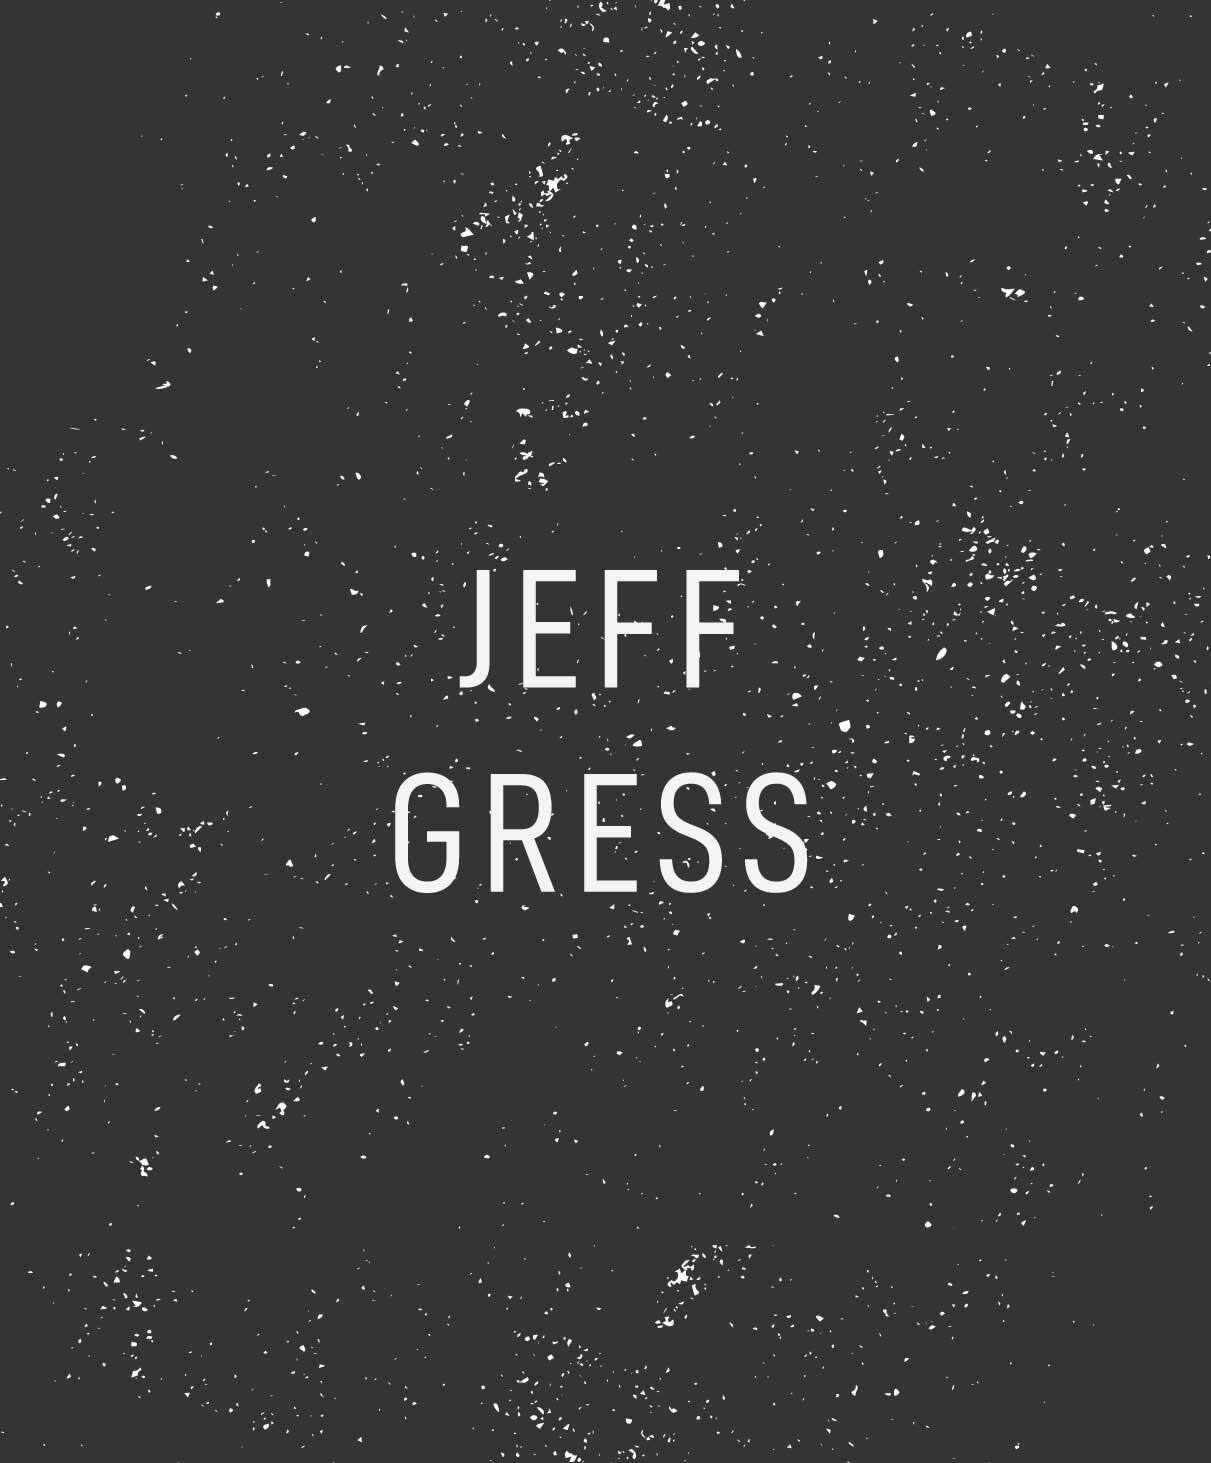 Jeff Gress